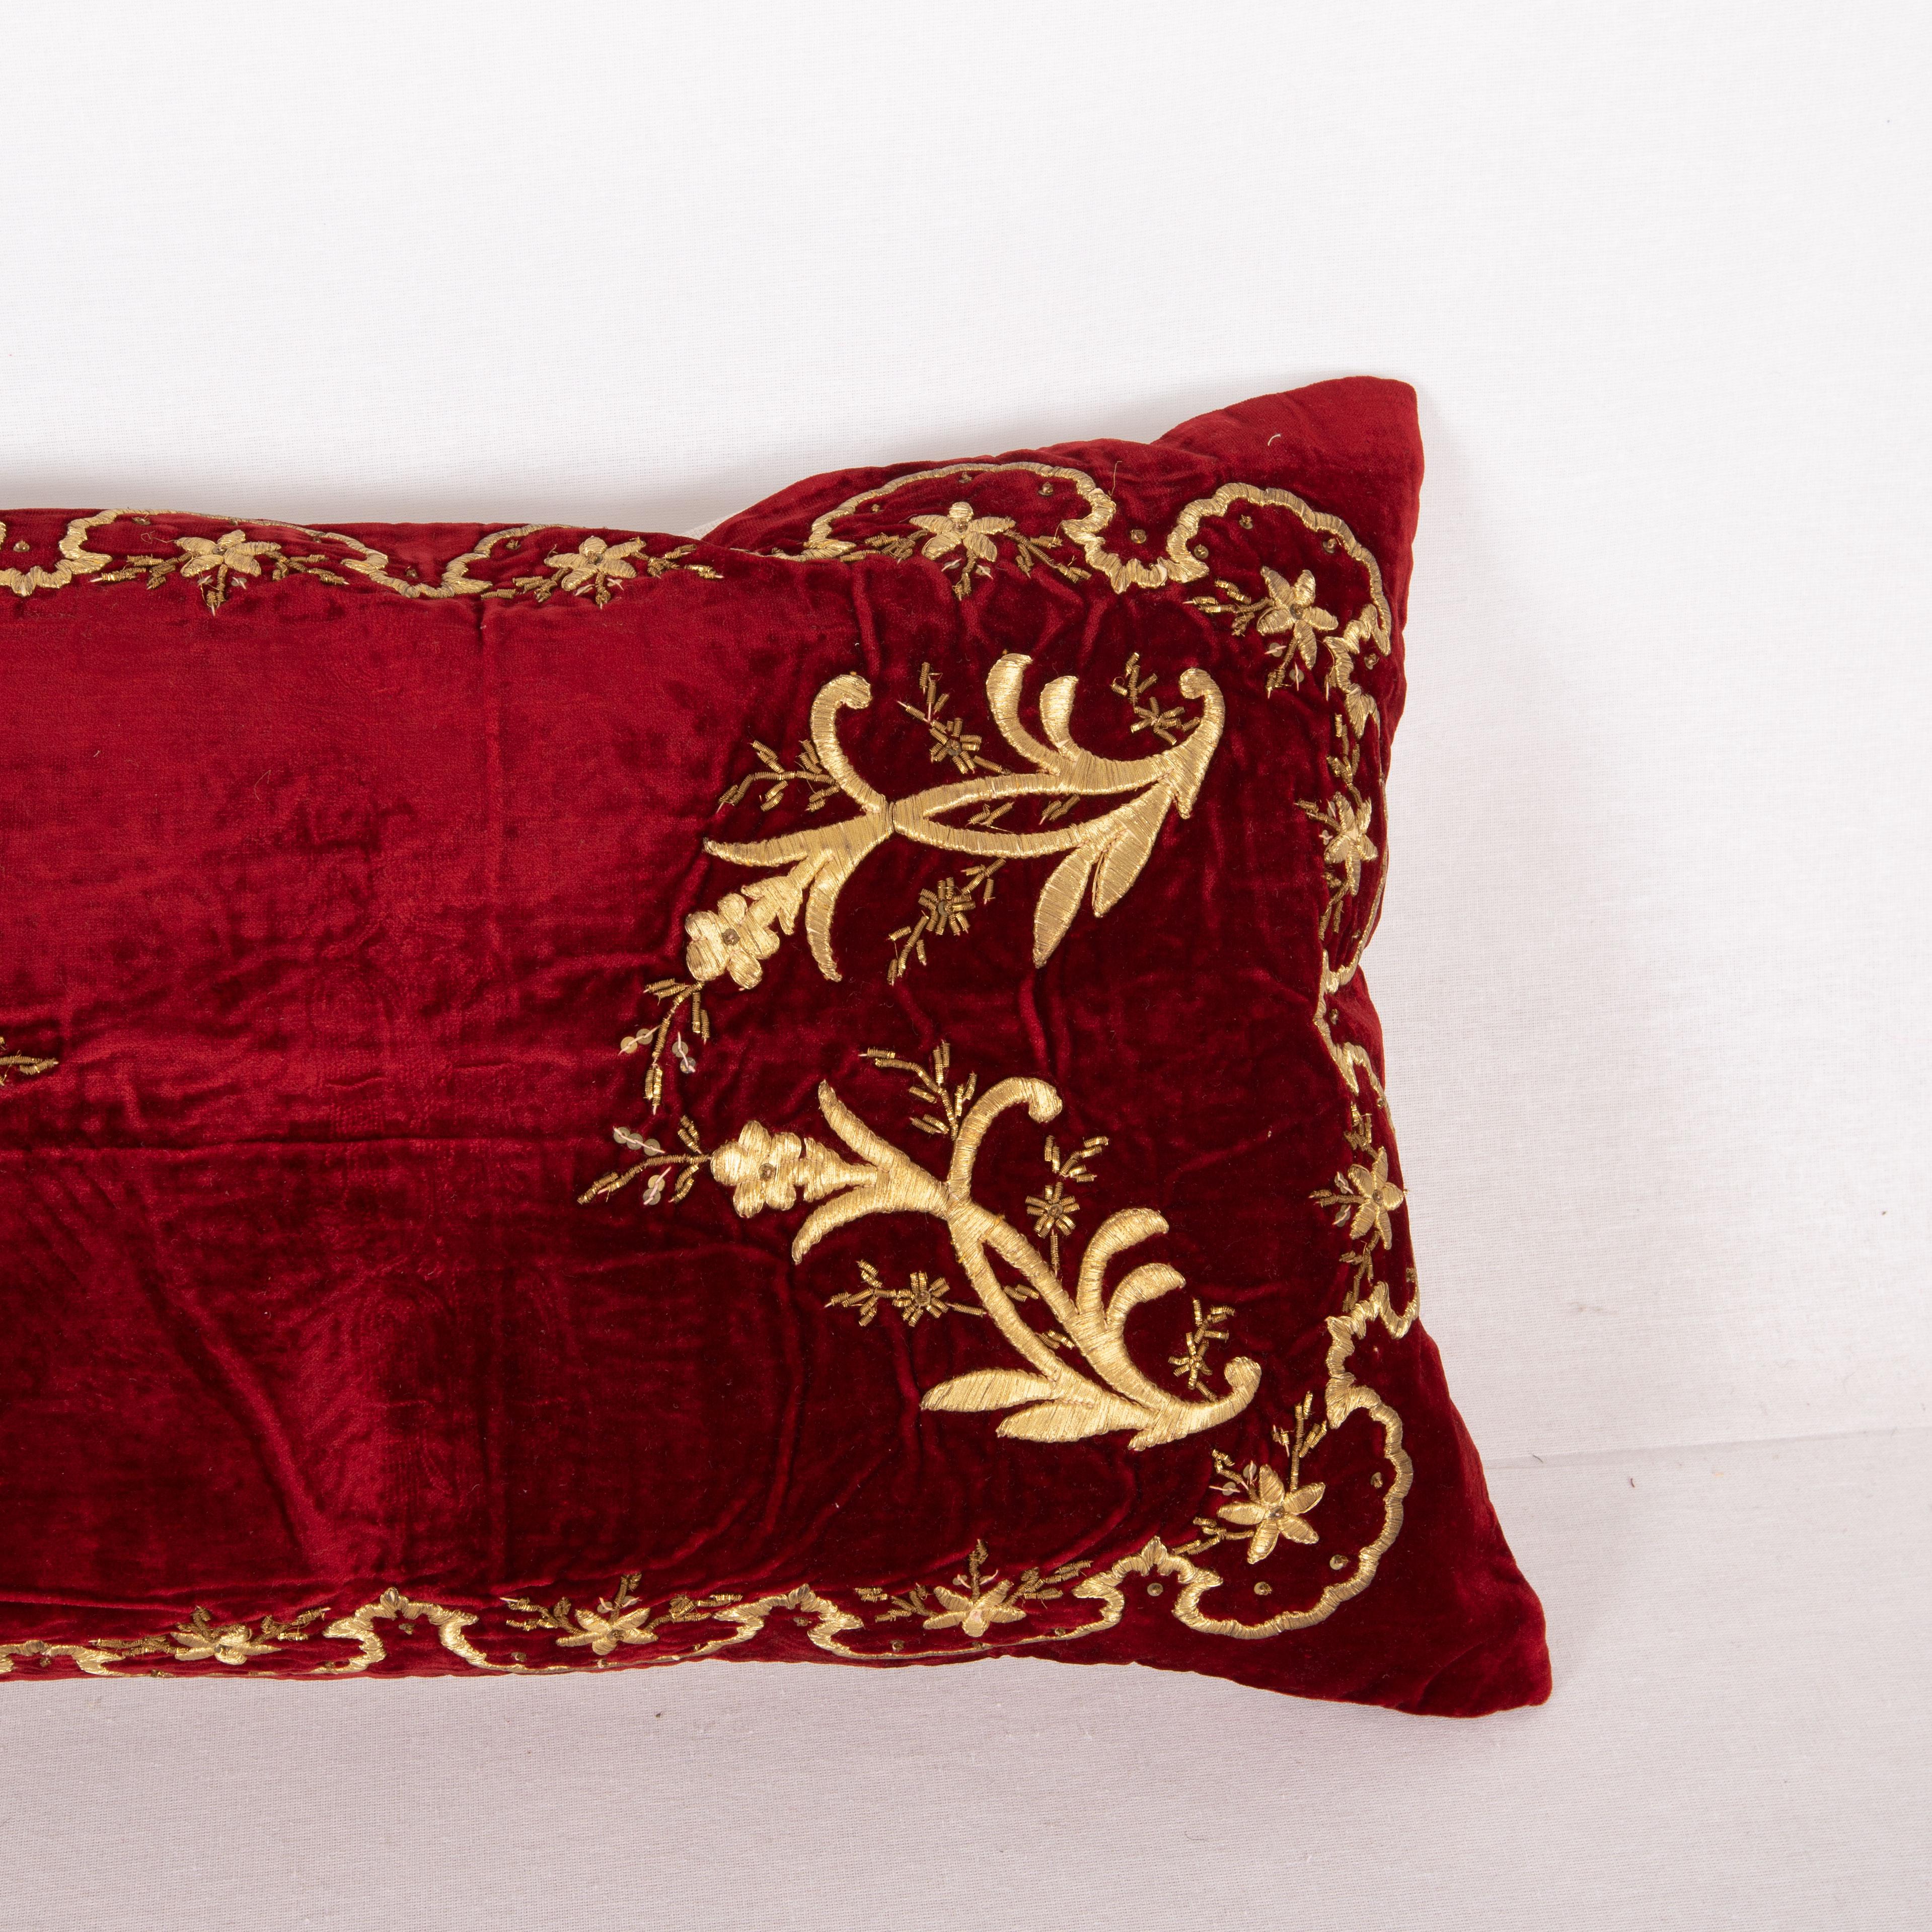 Embroidered Antique Silk Velvet Ottoman Sarma Pillow Cover, L 19th C.